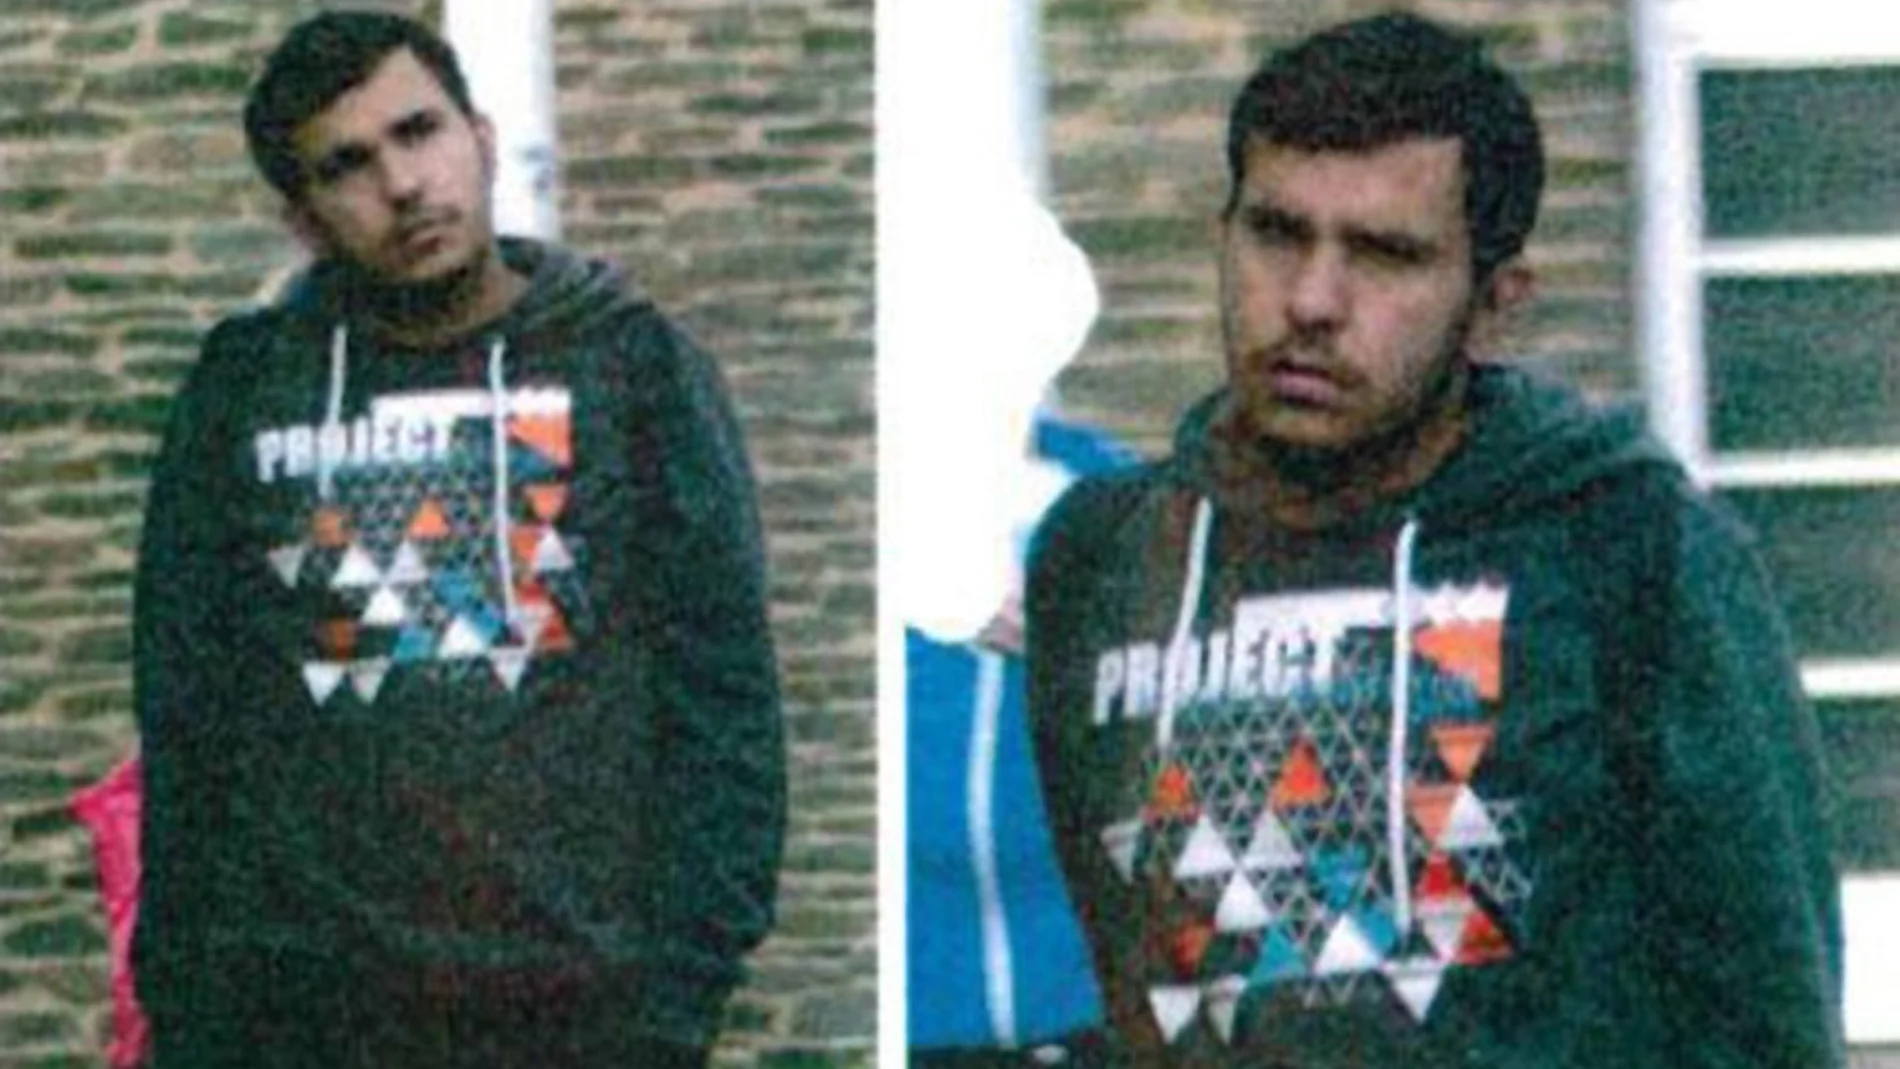 El presunto terrorista islamista detenido en Alemania Jaber Albakr